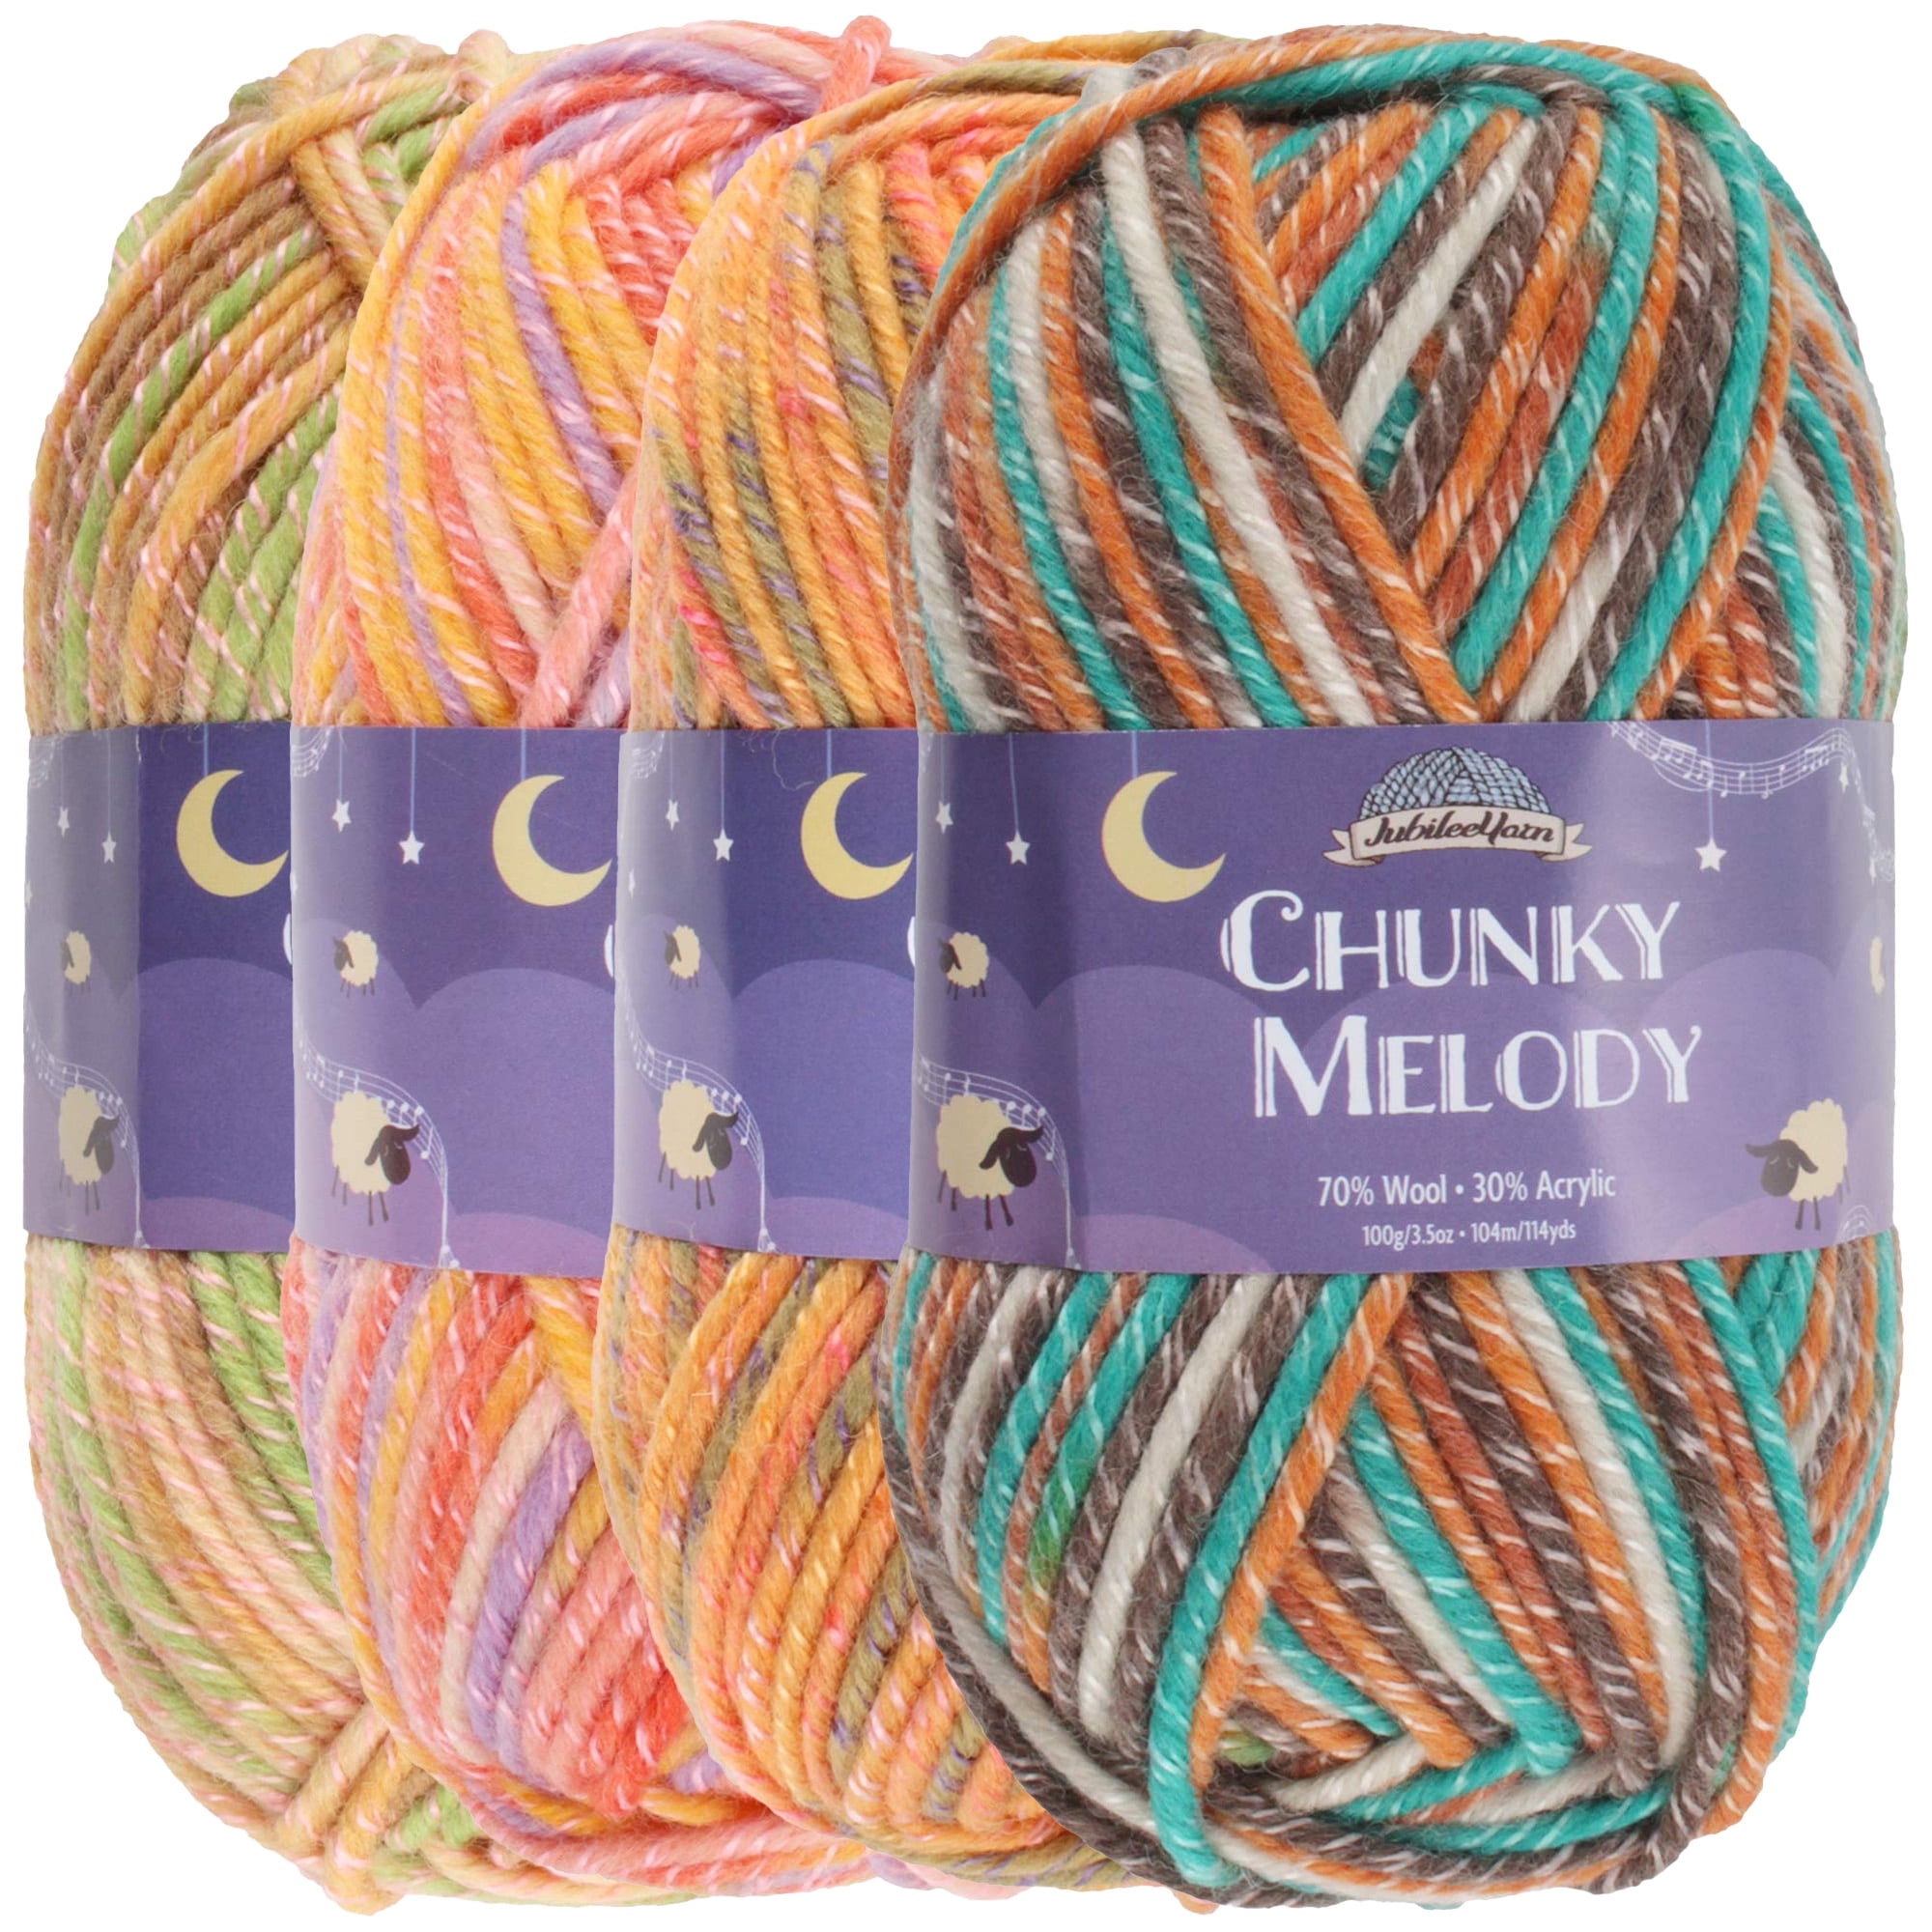 Chunky Melody Yarn - Worsted Wool blend - 100g/Skein - Shades of Orange - 4  Skeins 